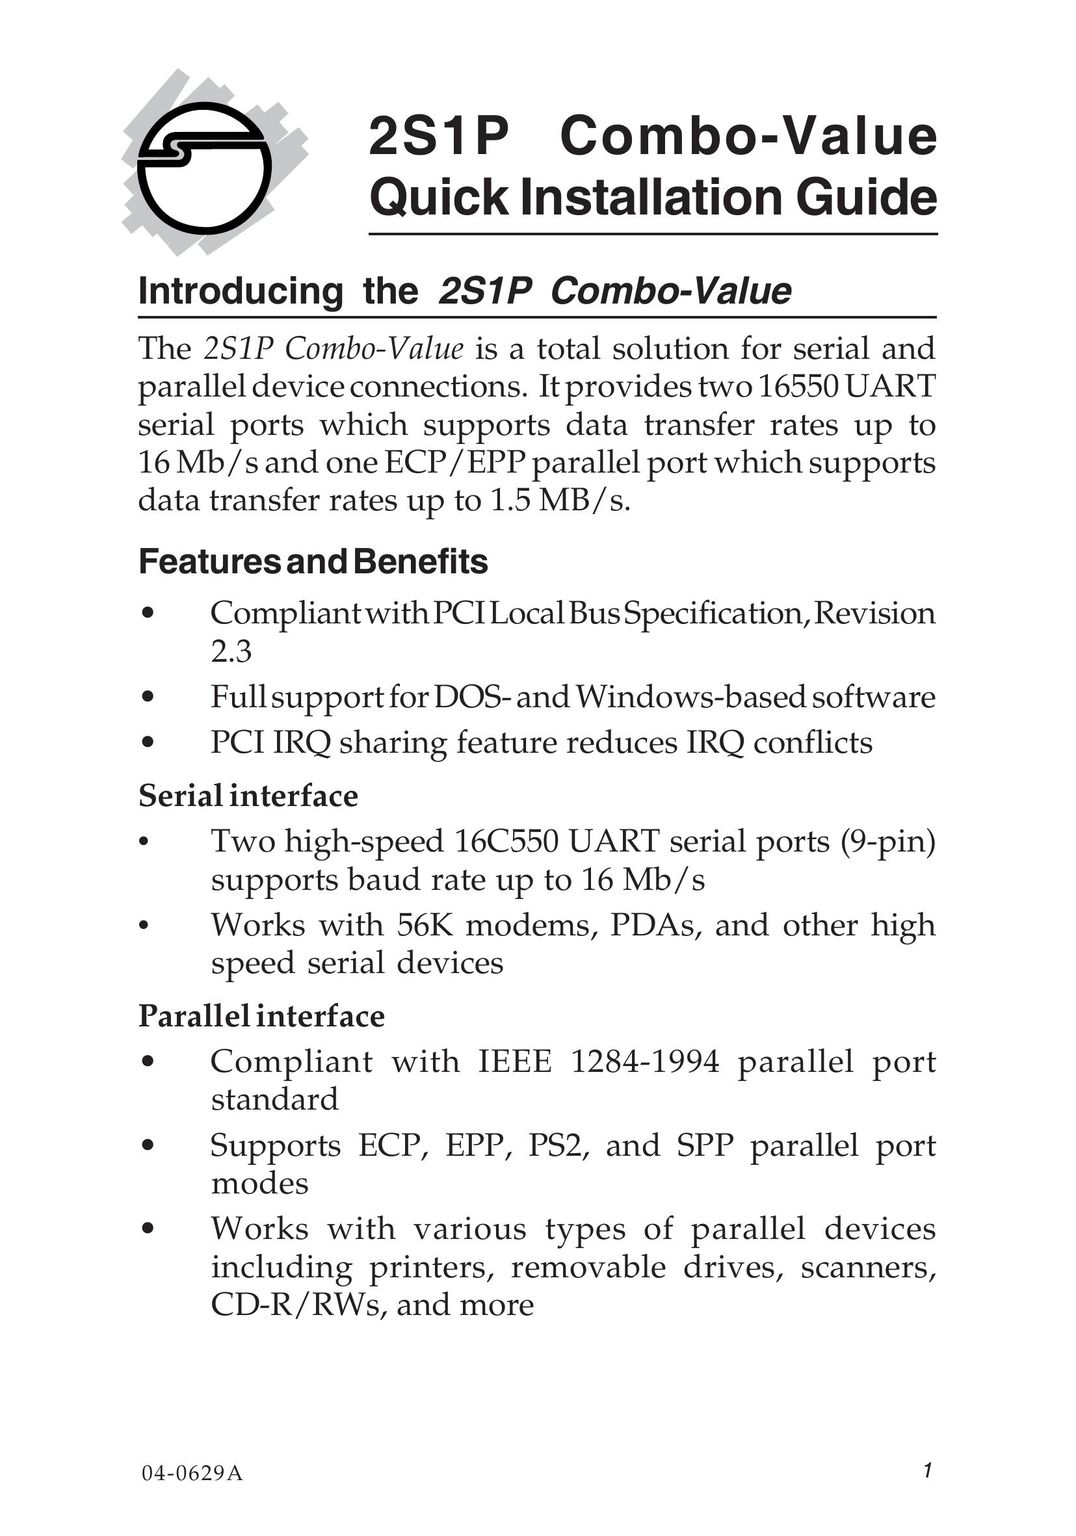 SIIG 04-0629A Computer Hardware User Manual